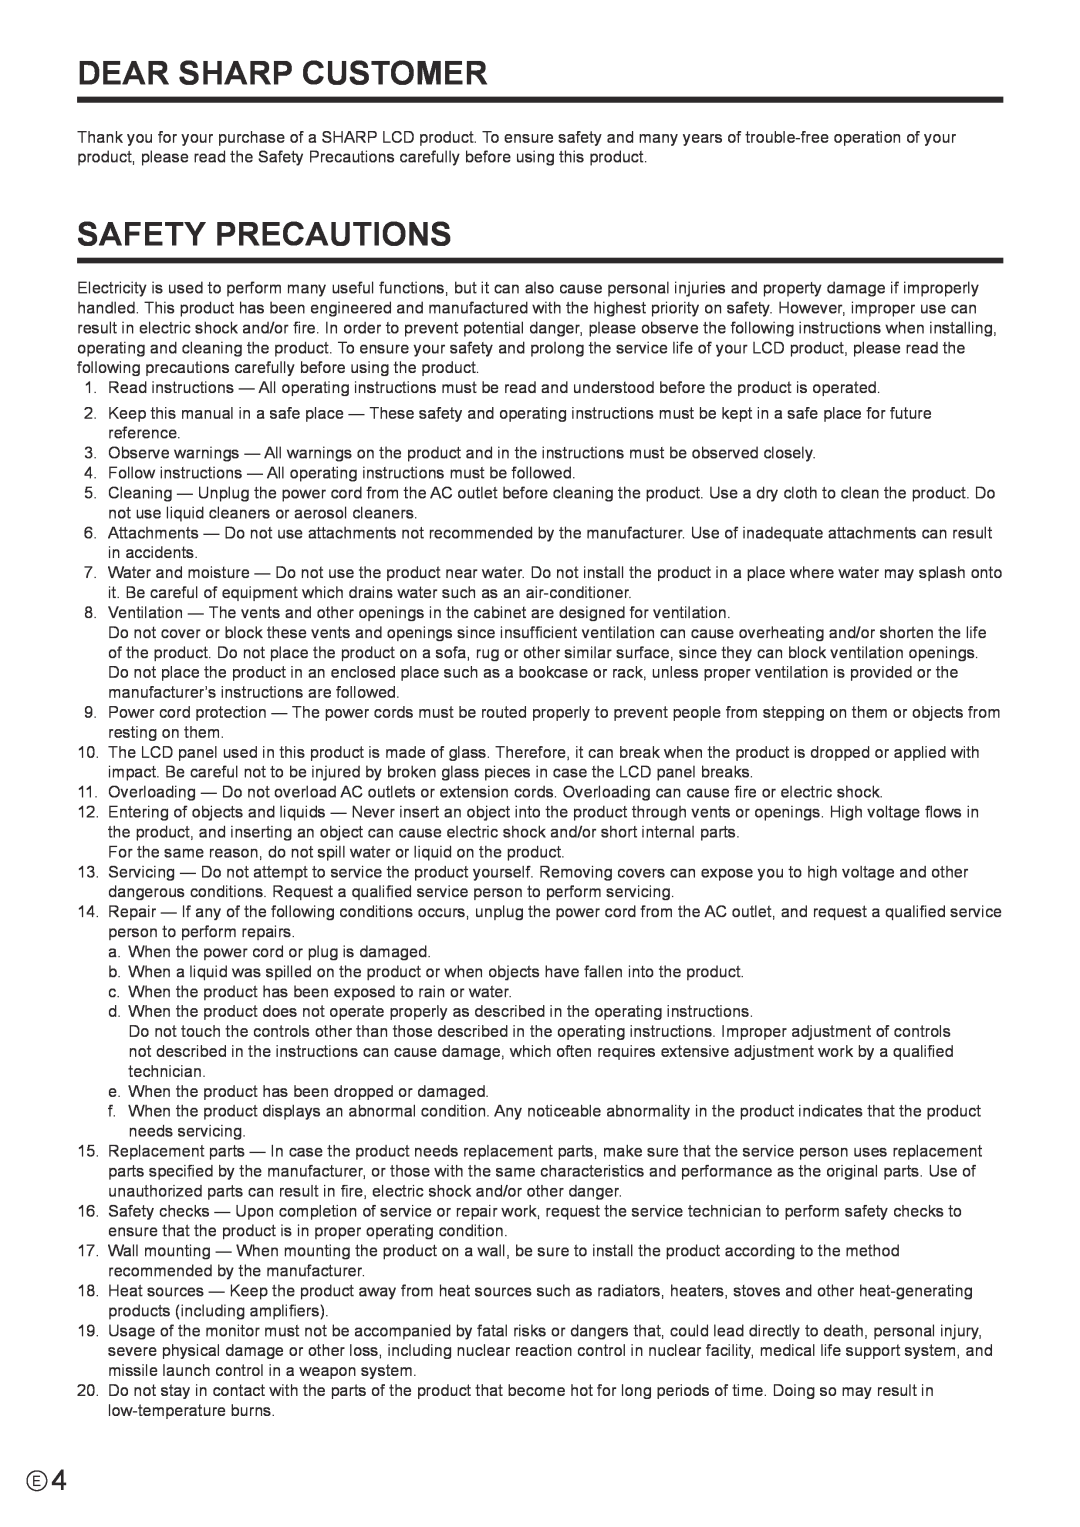 Sharp PN-K321 operation manual Dear Sharp Customer, Safety Precautions 